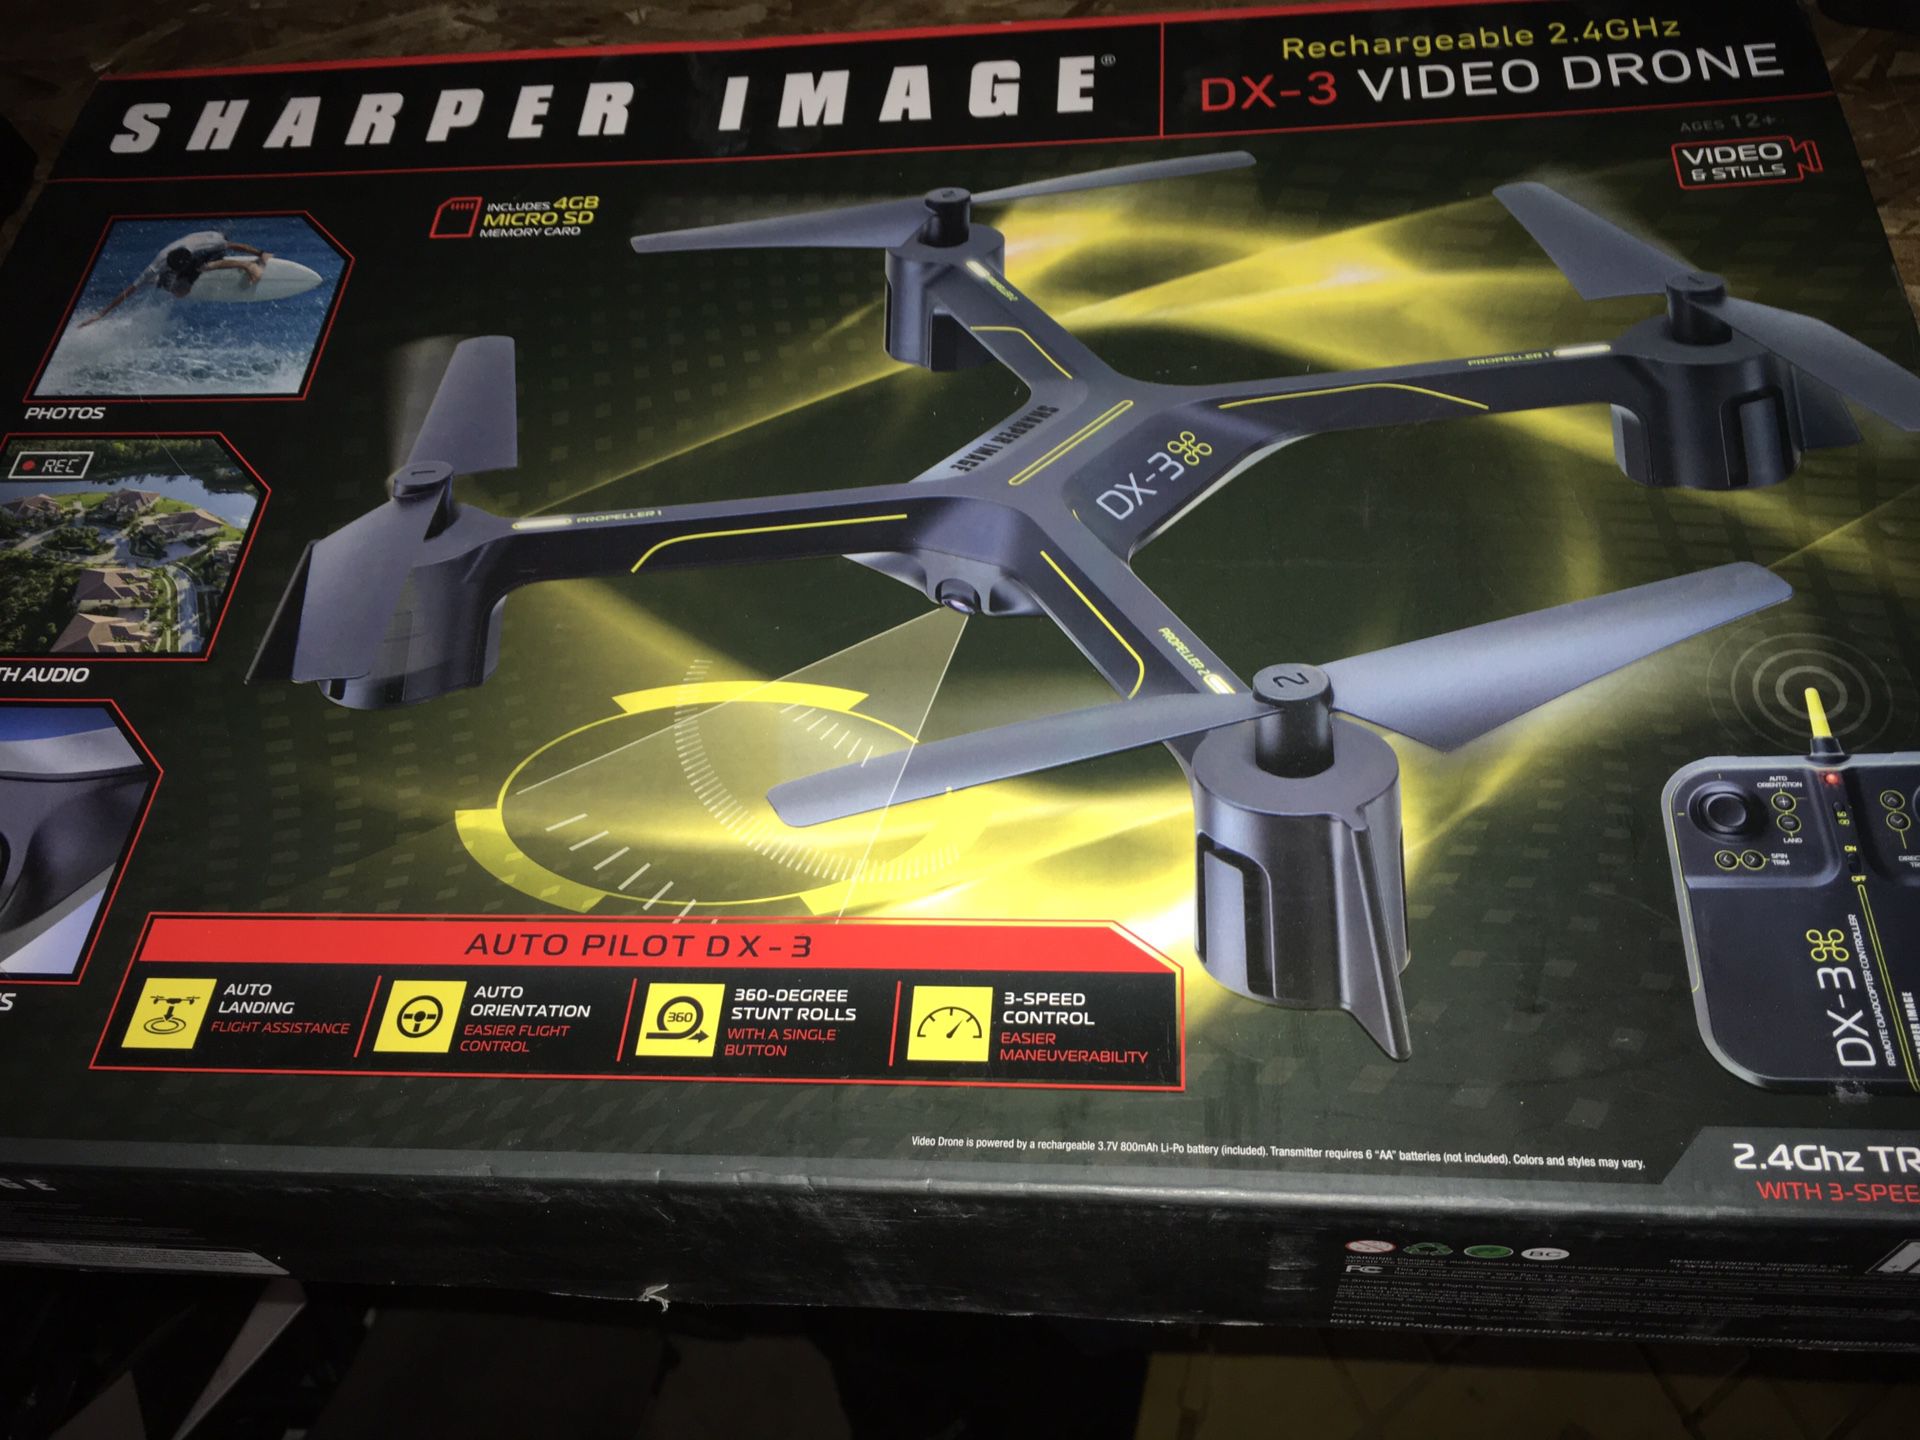 Sharper Image DX-3 Video drone